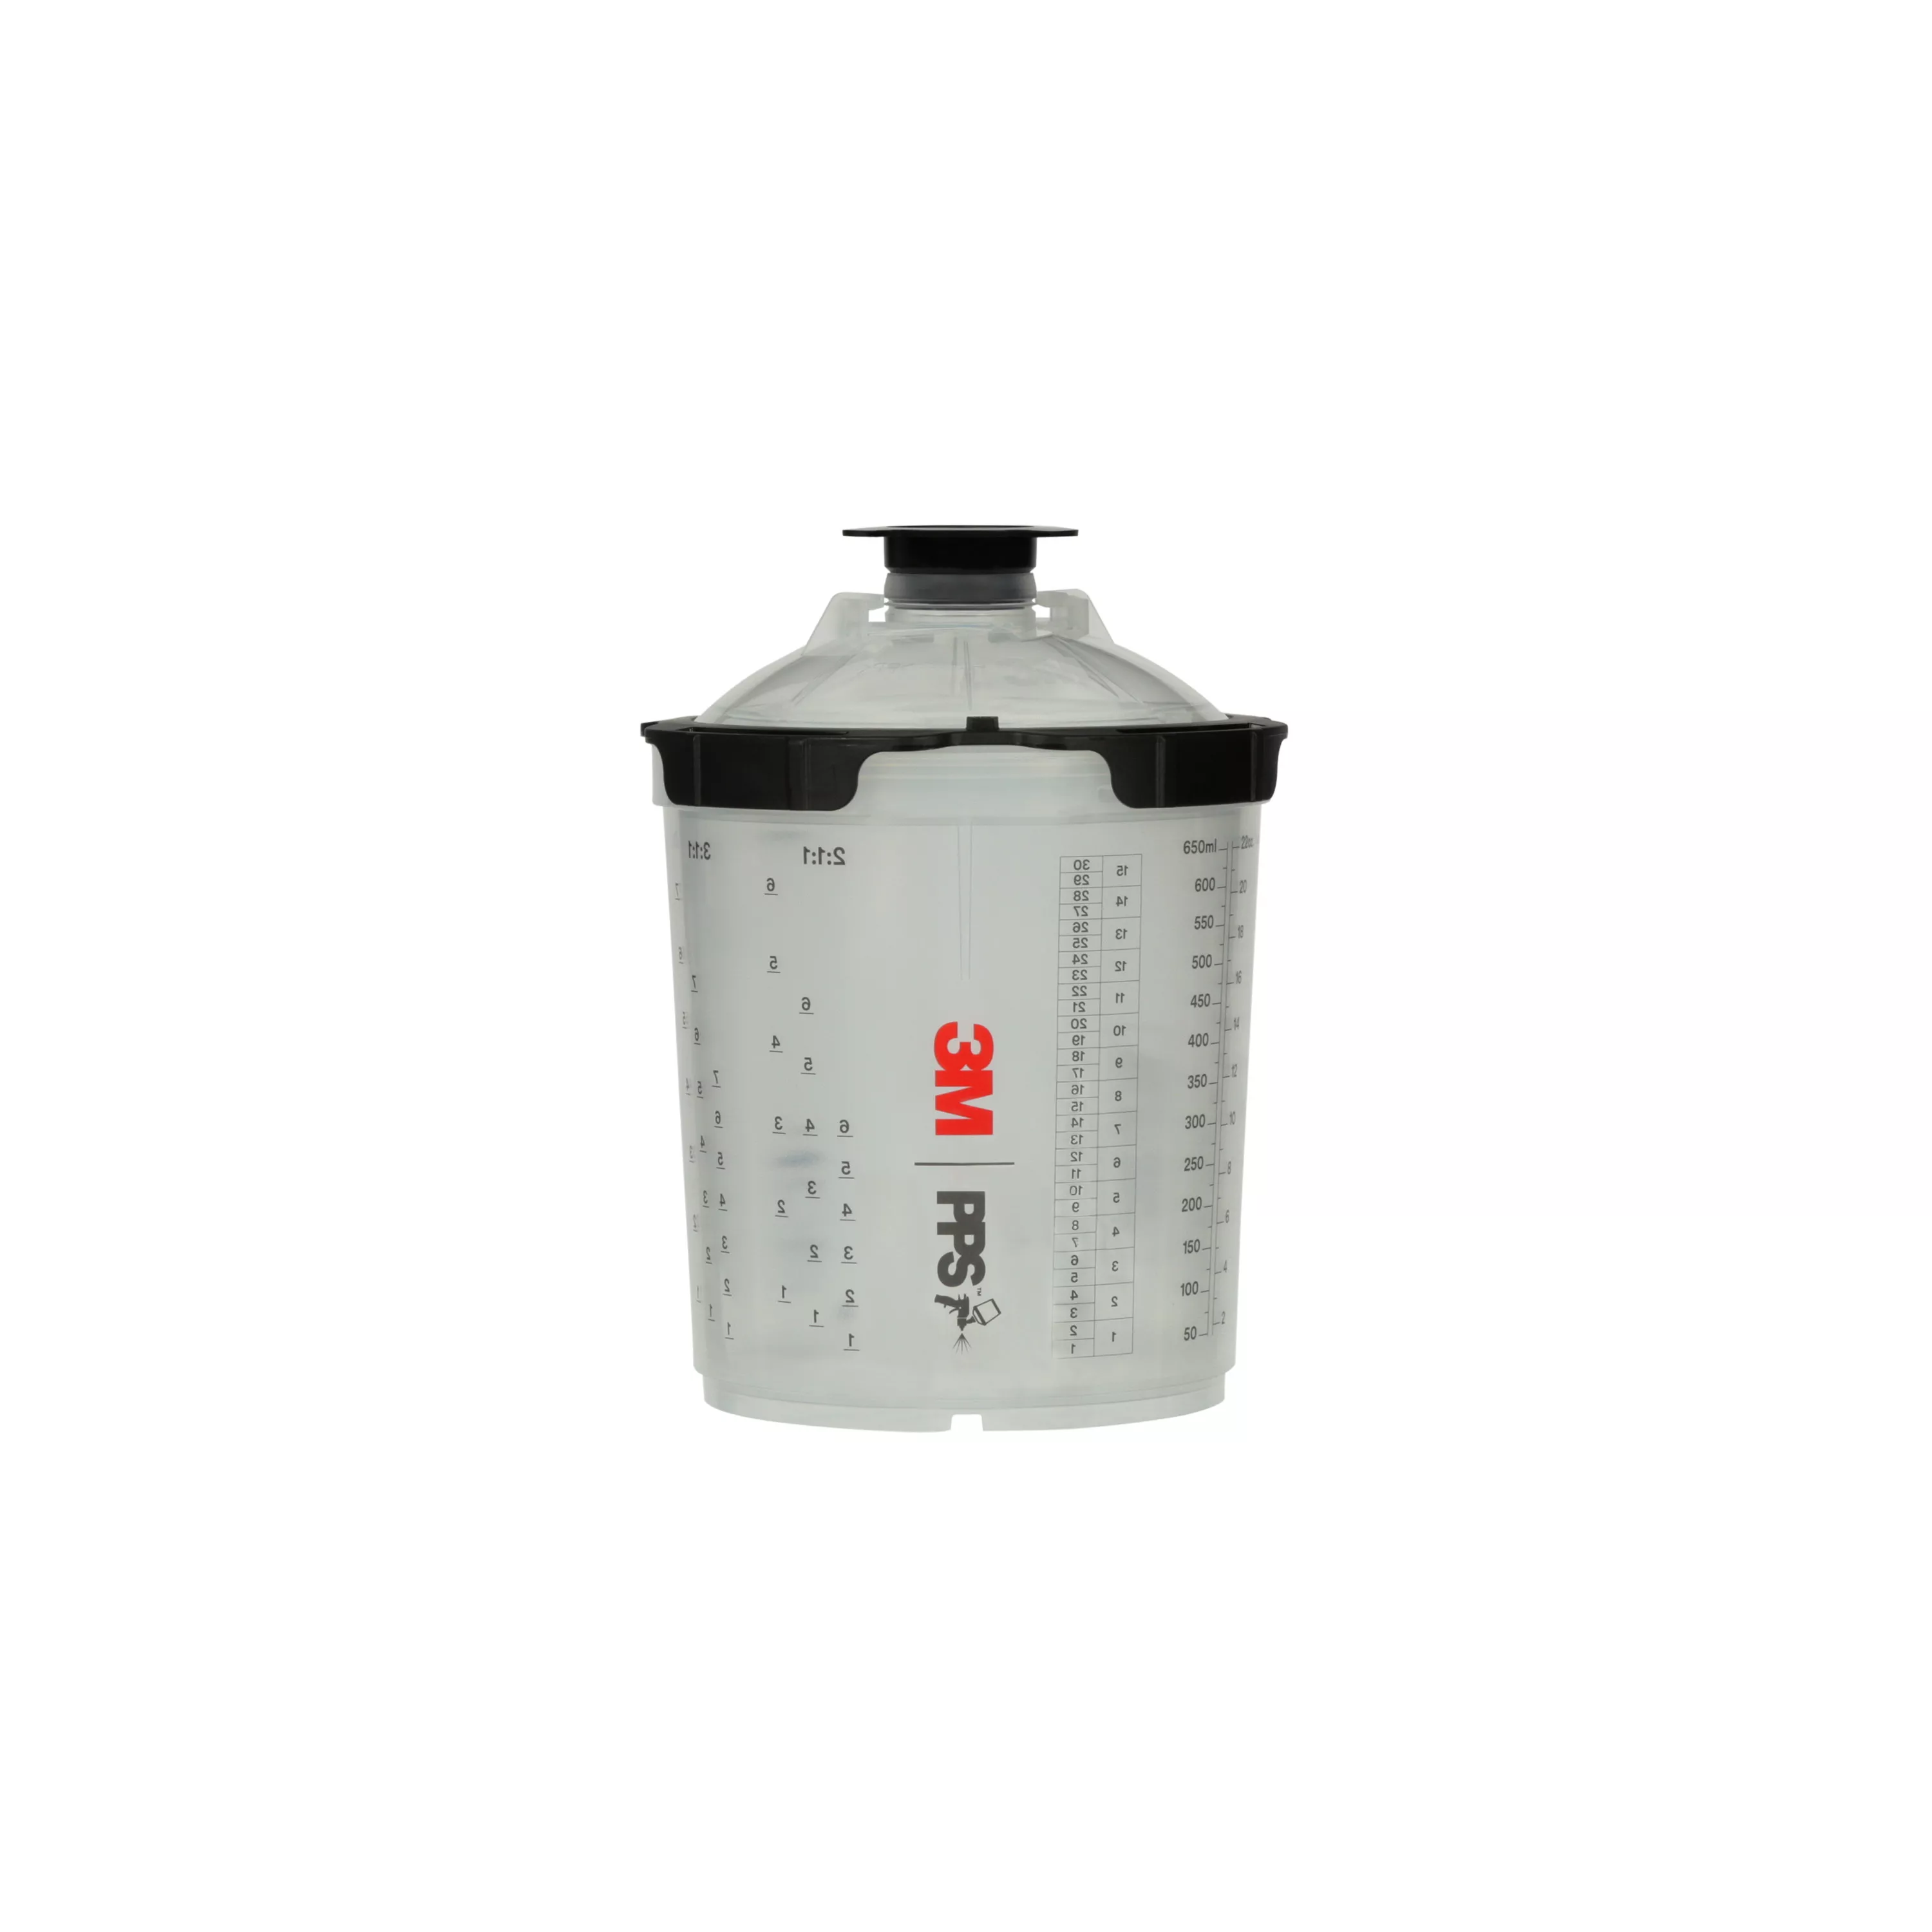 3M™ PPS™ Series 2.0 Spray Cup System Kit 26000, Standard (22 fl oz, 650
mL), 200 Micron Filter, 1 Kit/Case